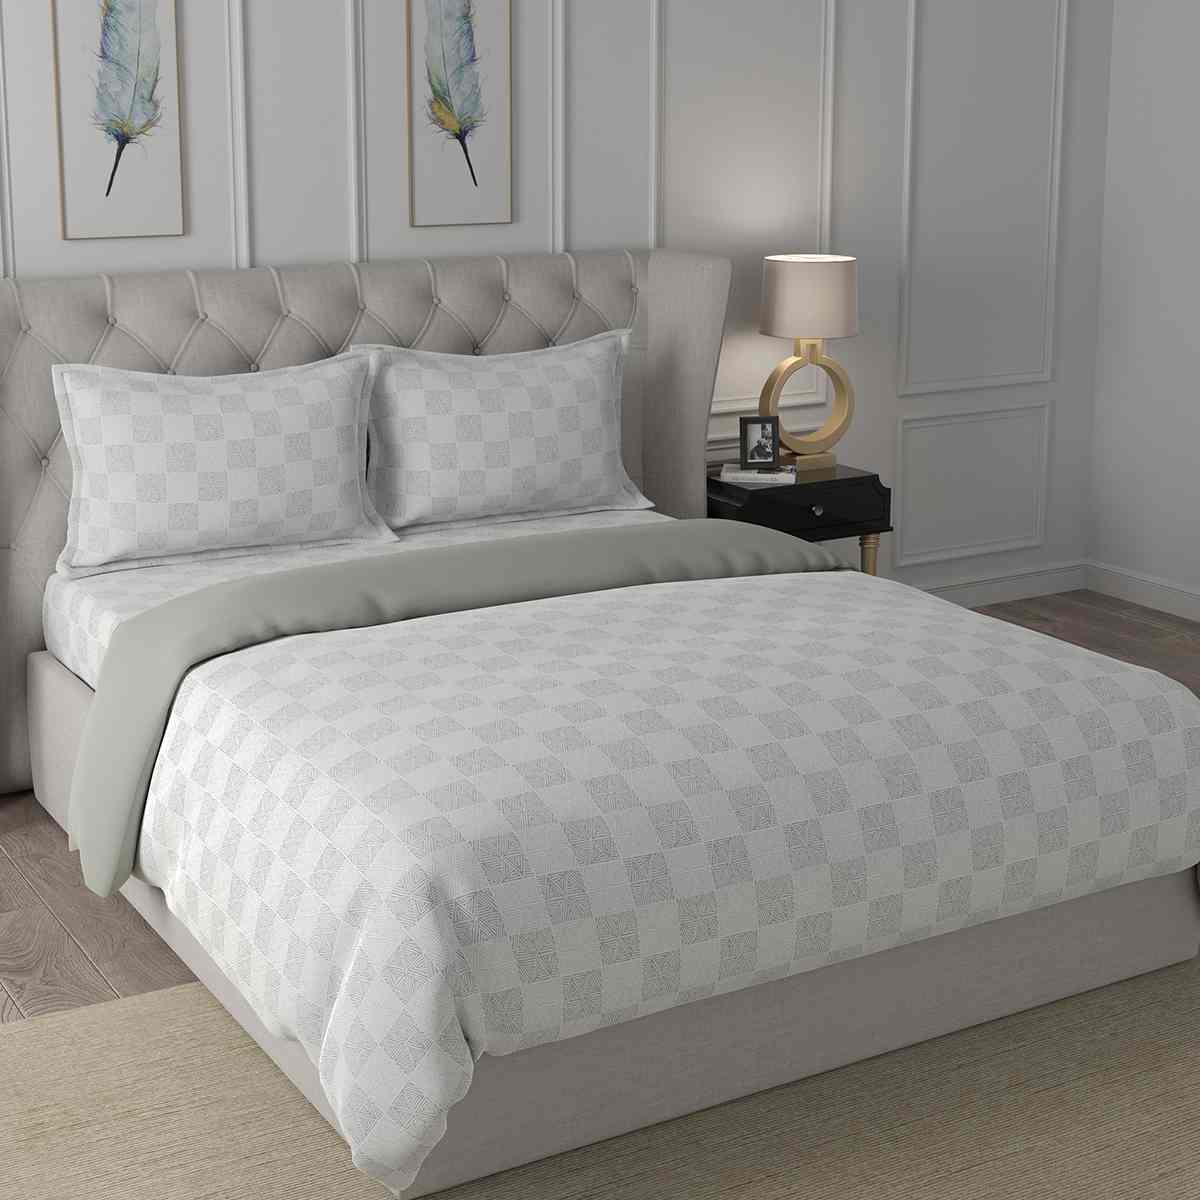 Regency Juliana Summer AC Quilt/Quilted Bed Cover/Comforter Grey